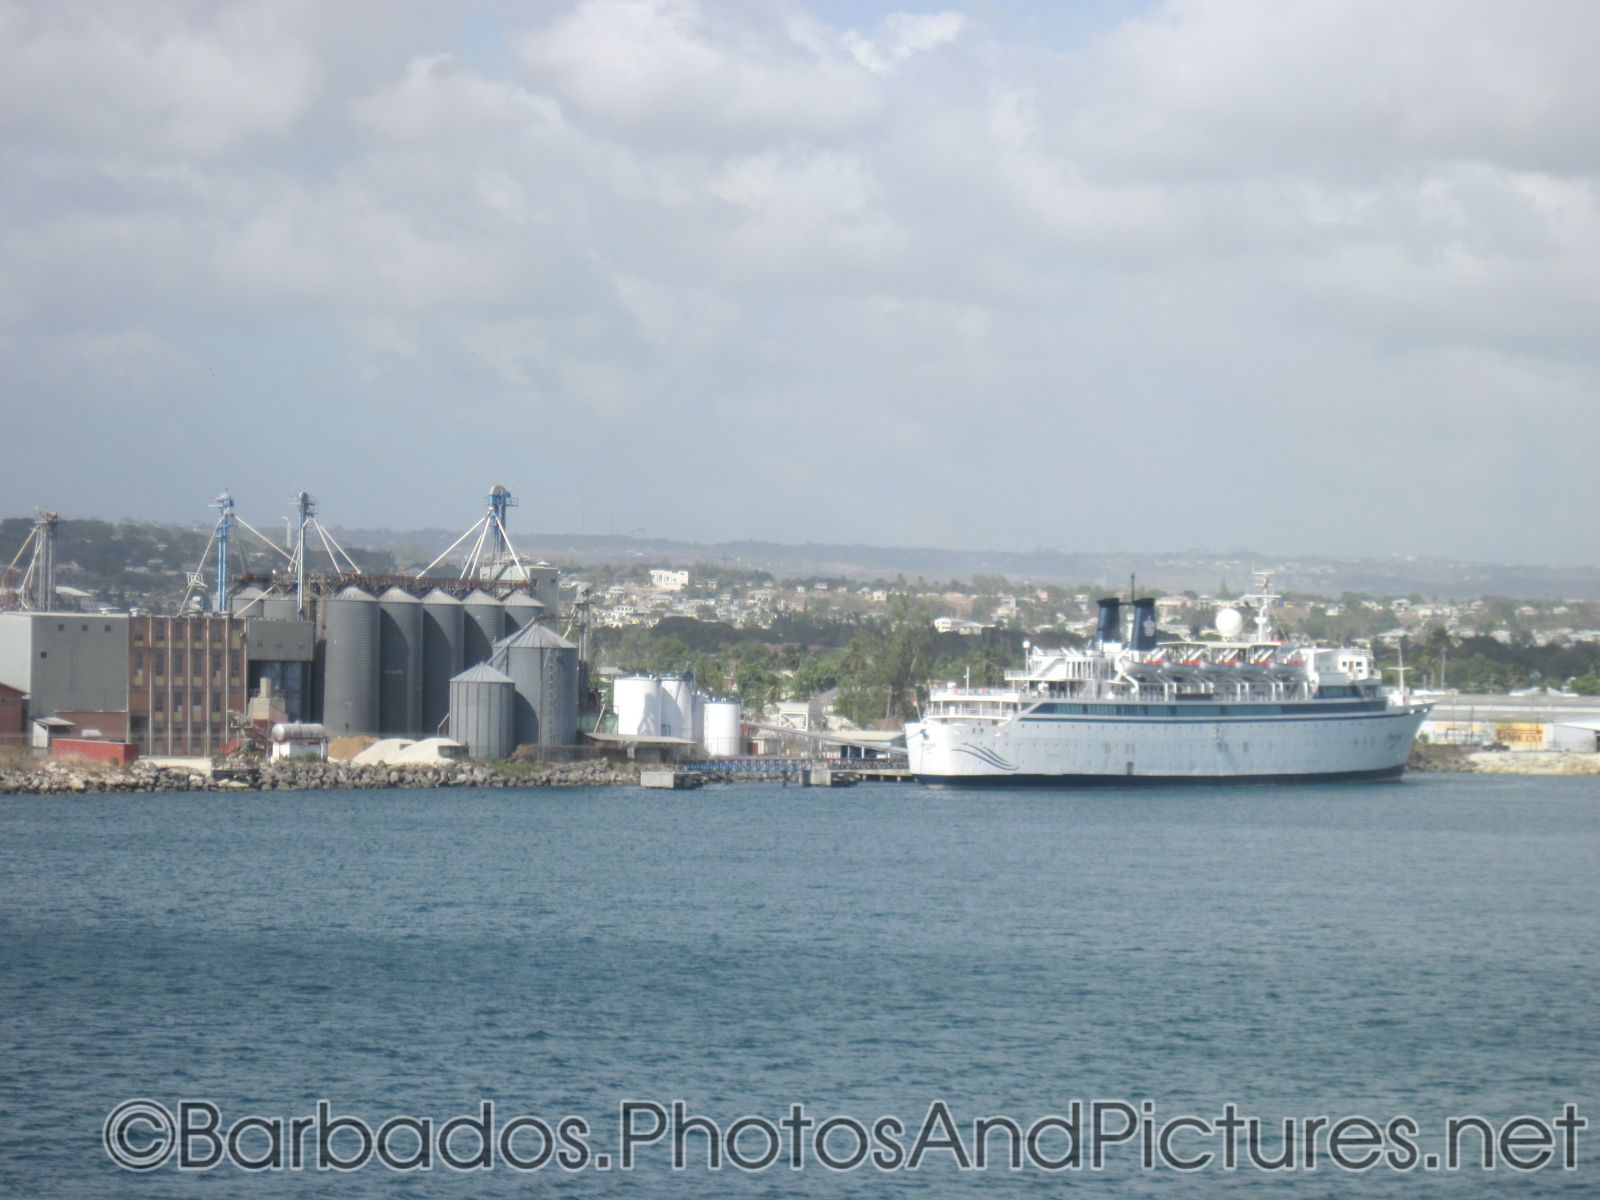 Older cruise ship docked next to factory in Barbados.jpg
